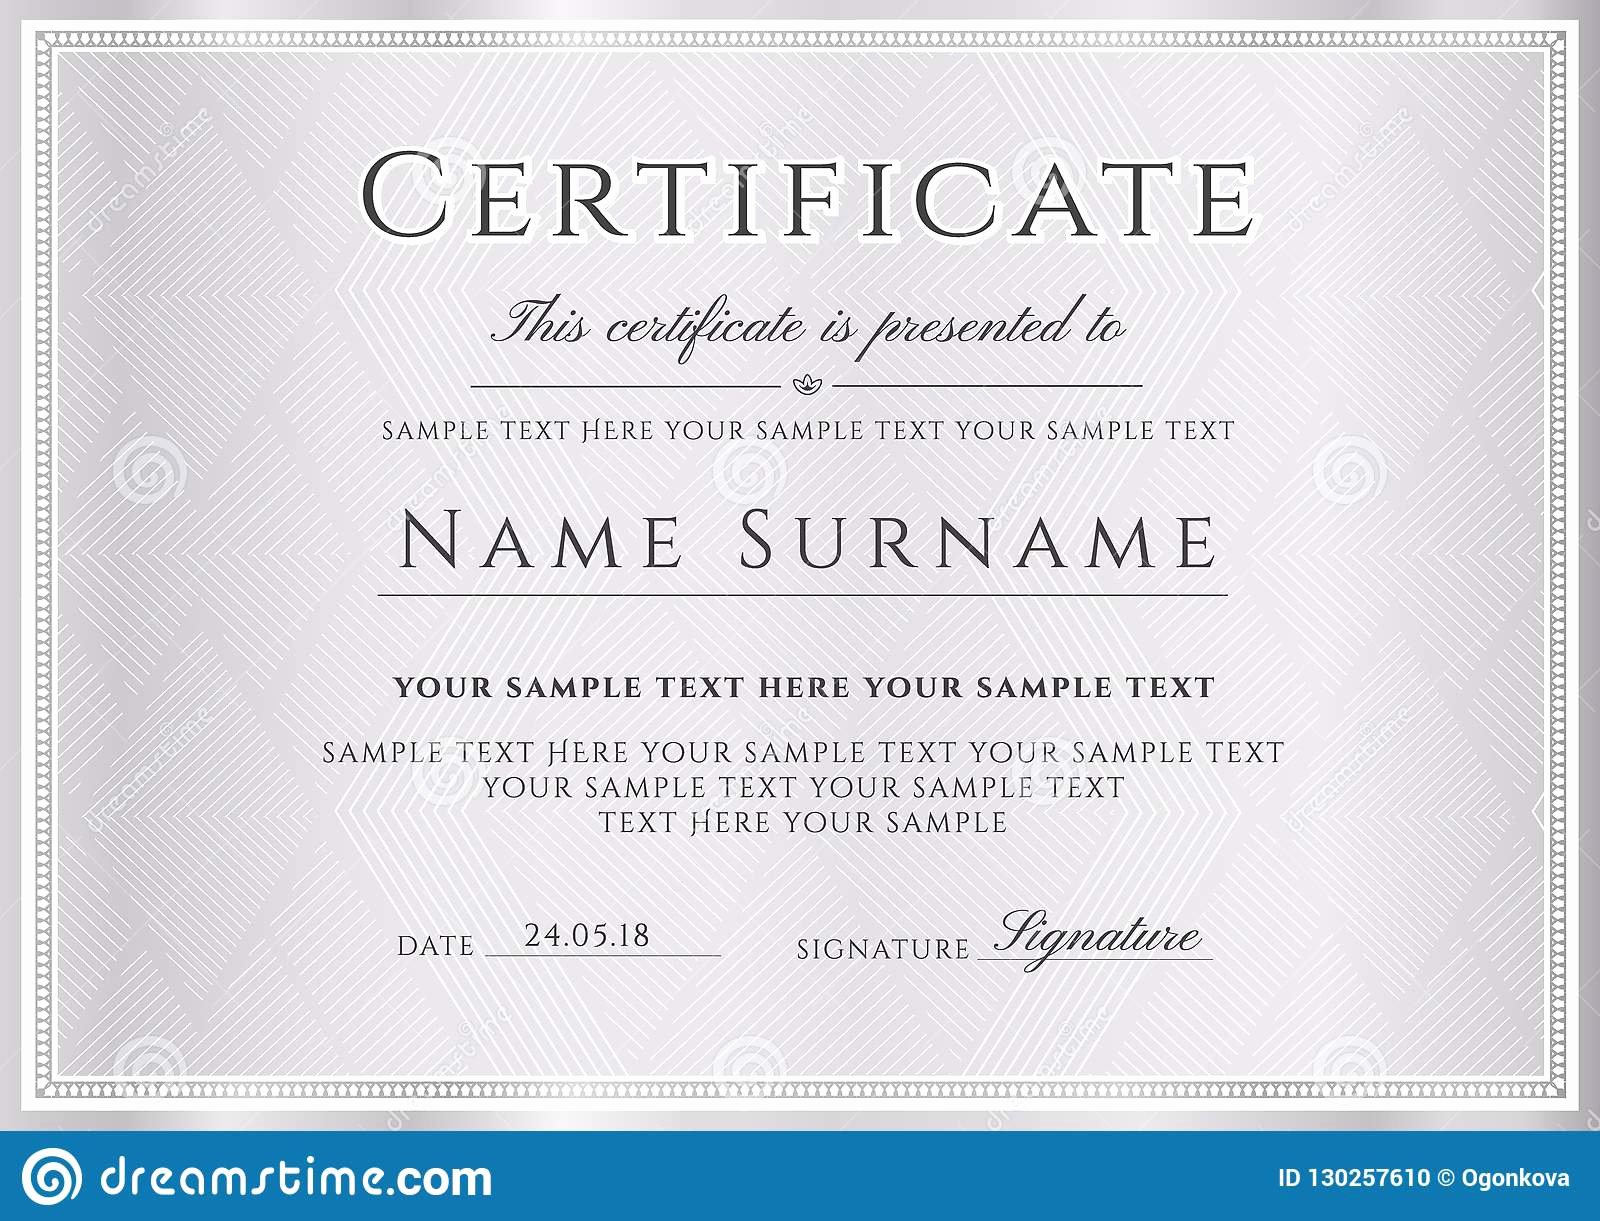 Certificate Of Appreciation for Donation Template Fresh Certificate Vector Template formal Silver Border